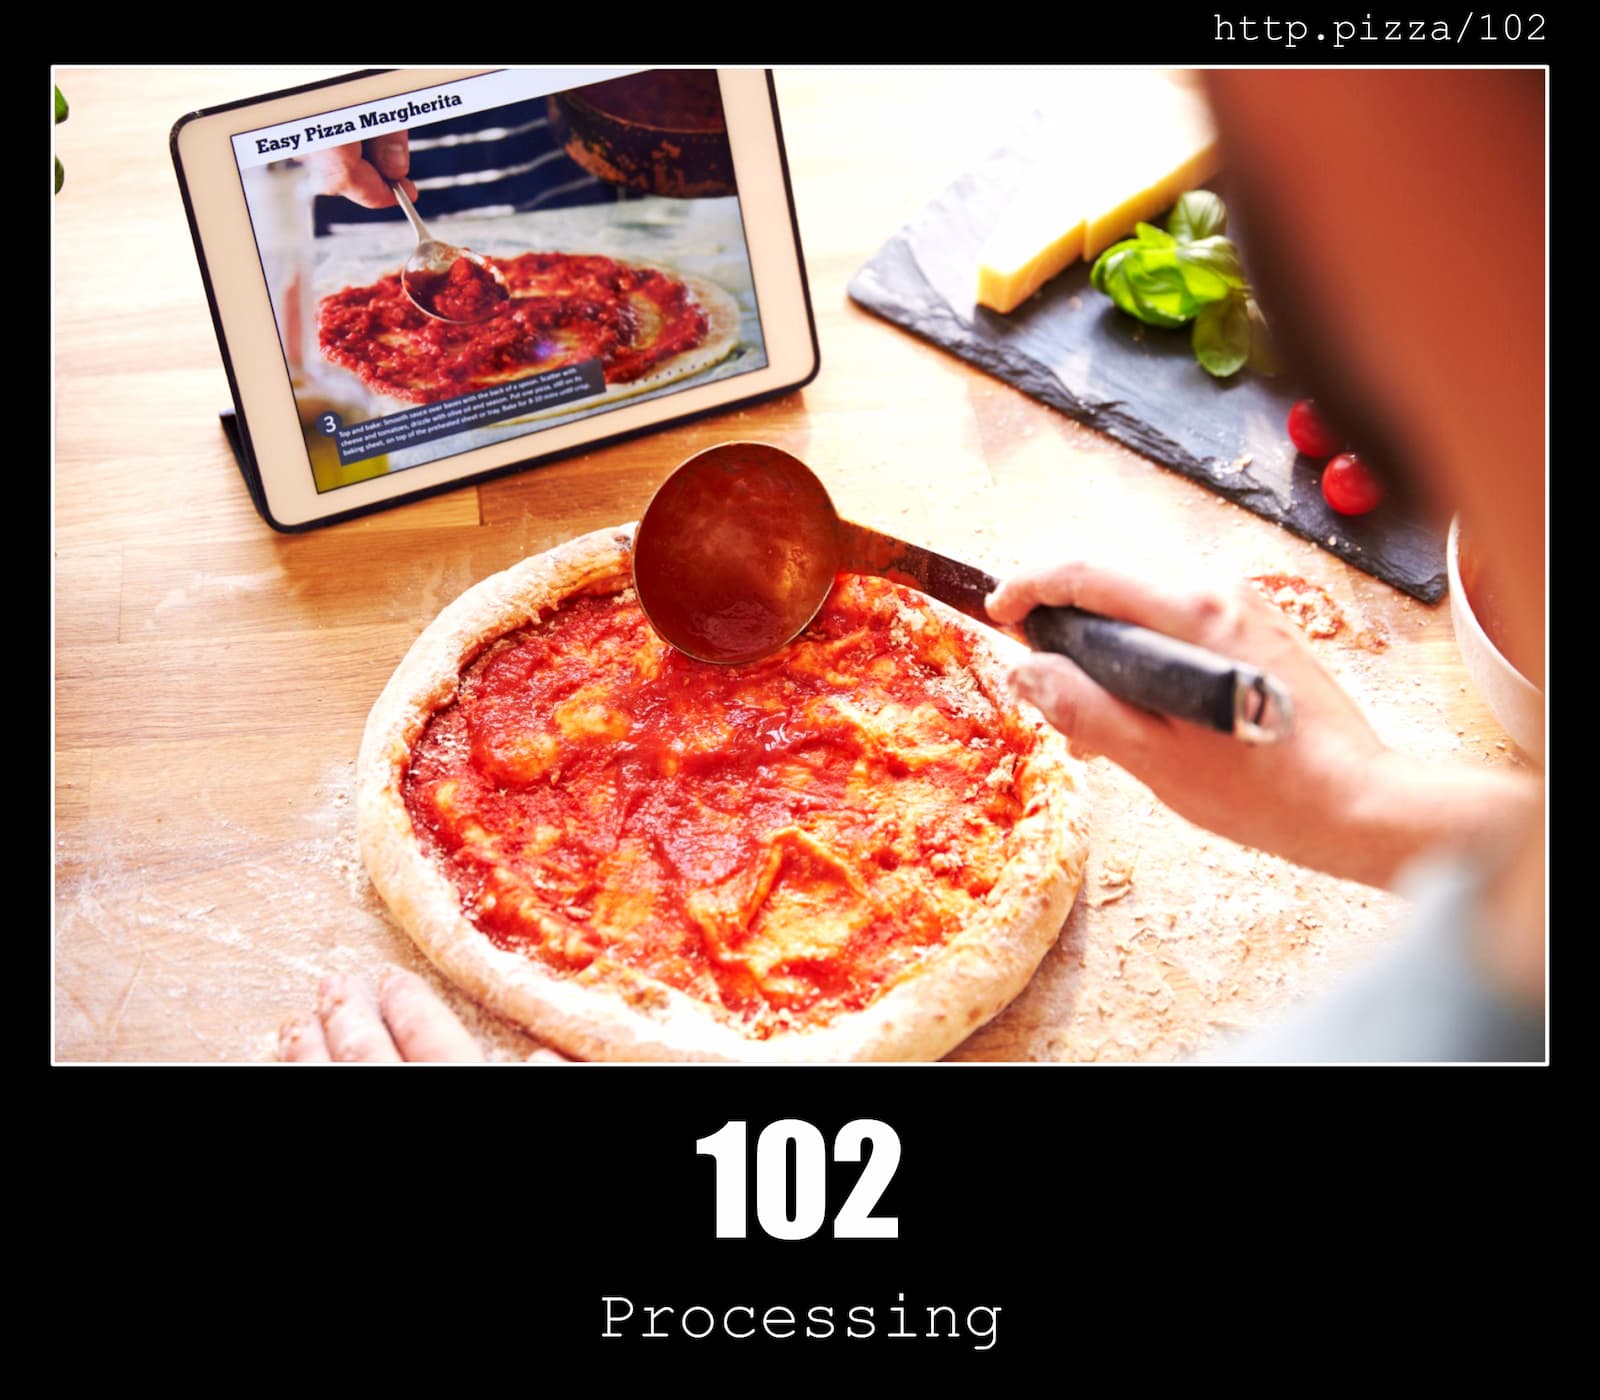 HTTP Status Code 102 Processing & Pizzas